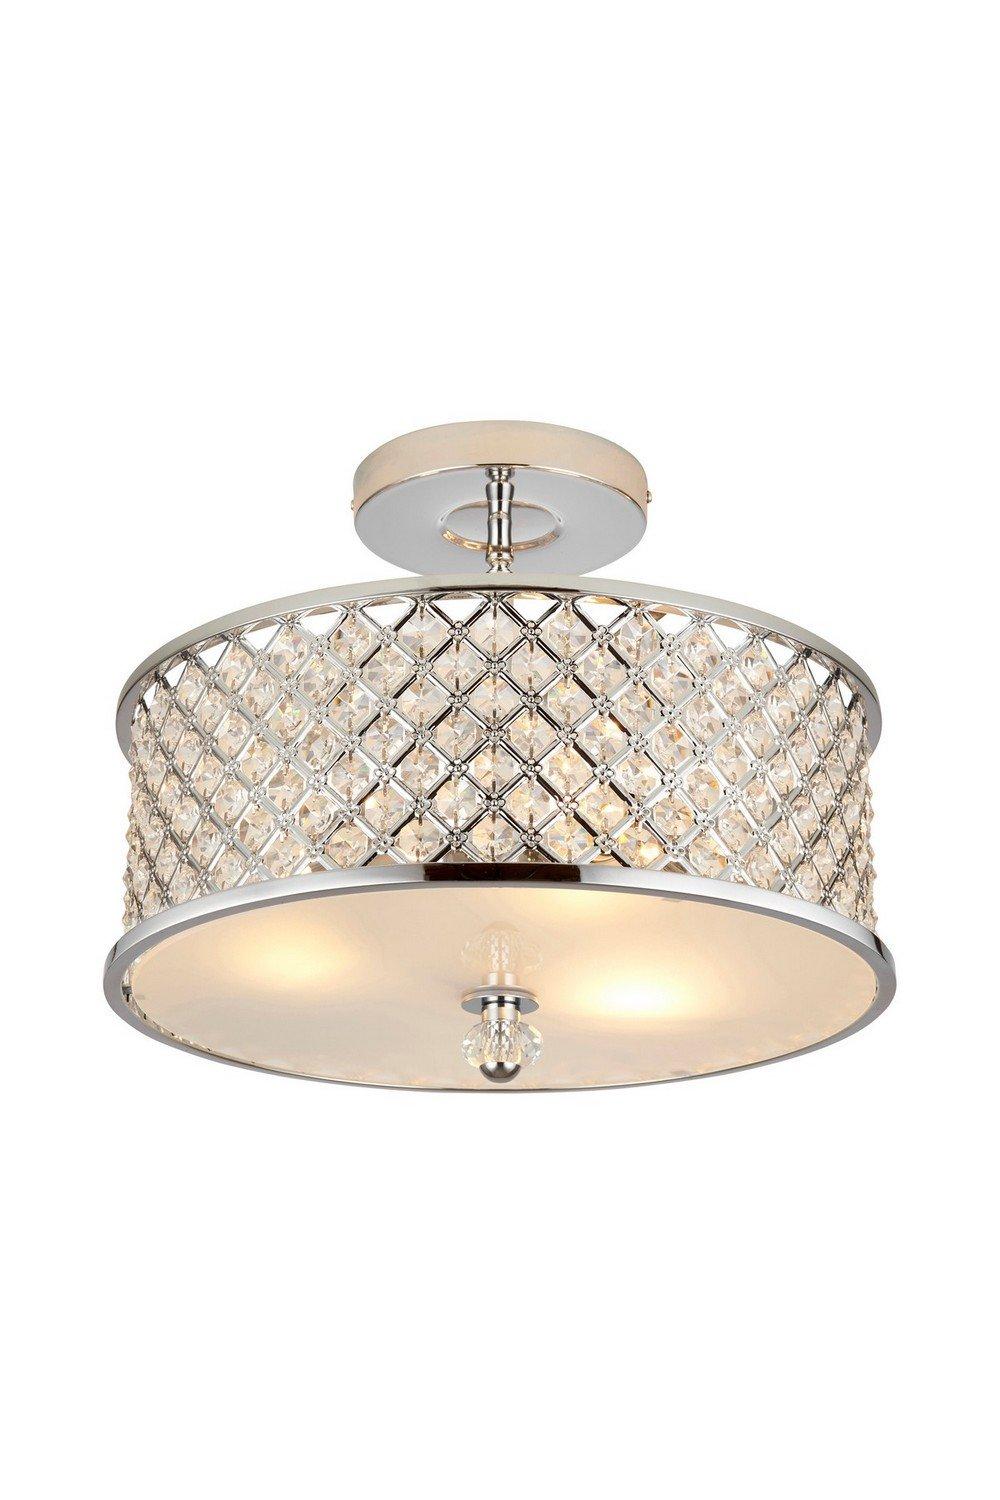 Hudson 3 Light Semi Flush Ceiling Light Metal with Crystal Beads & Glass Diffuser E27